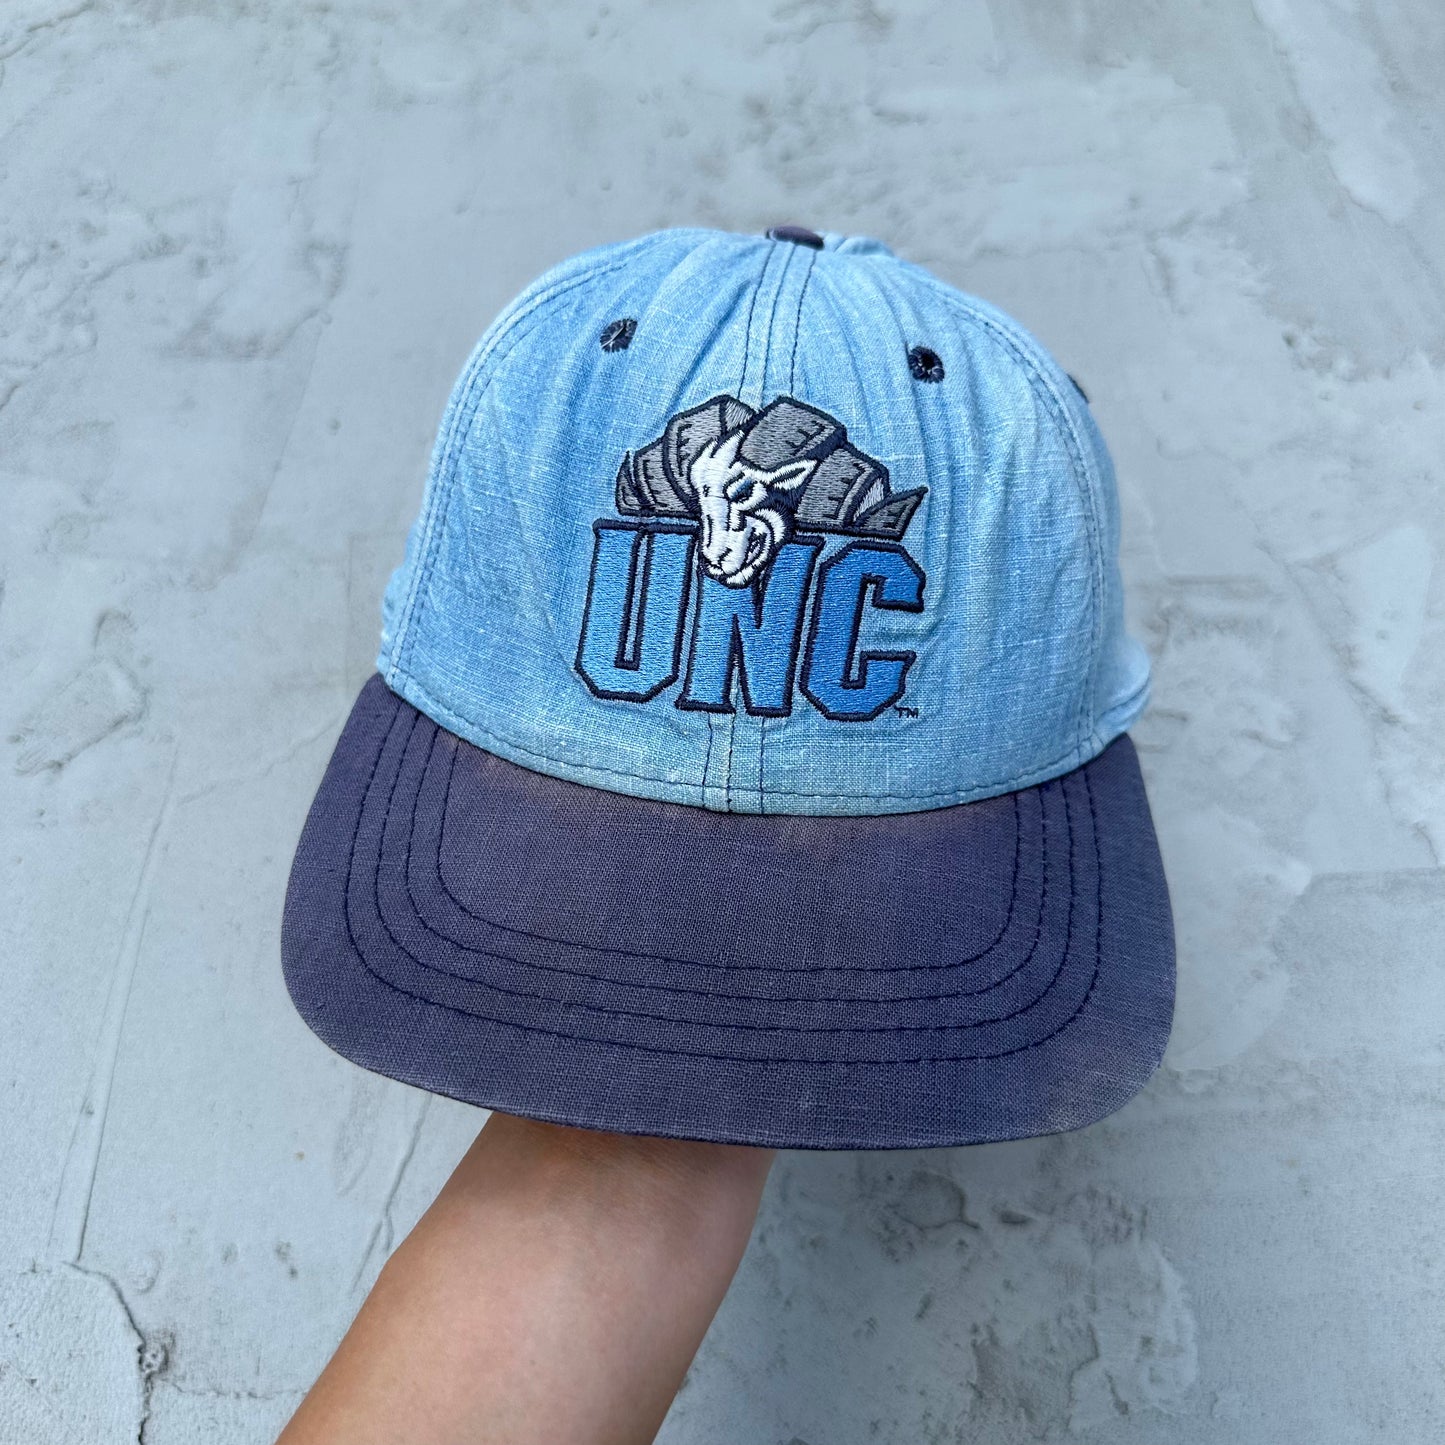 Vintage UNC University of North Carolina Tar Heels Denim Hat